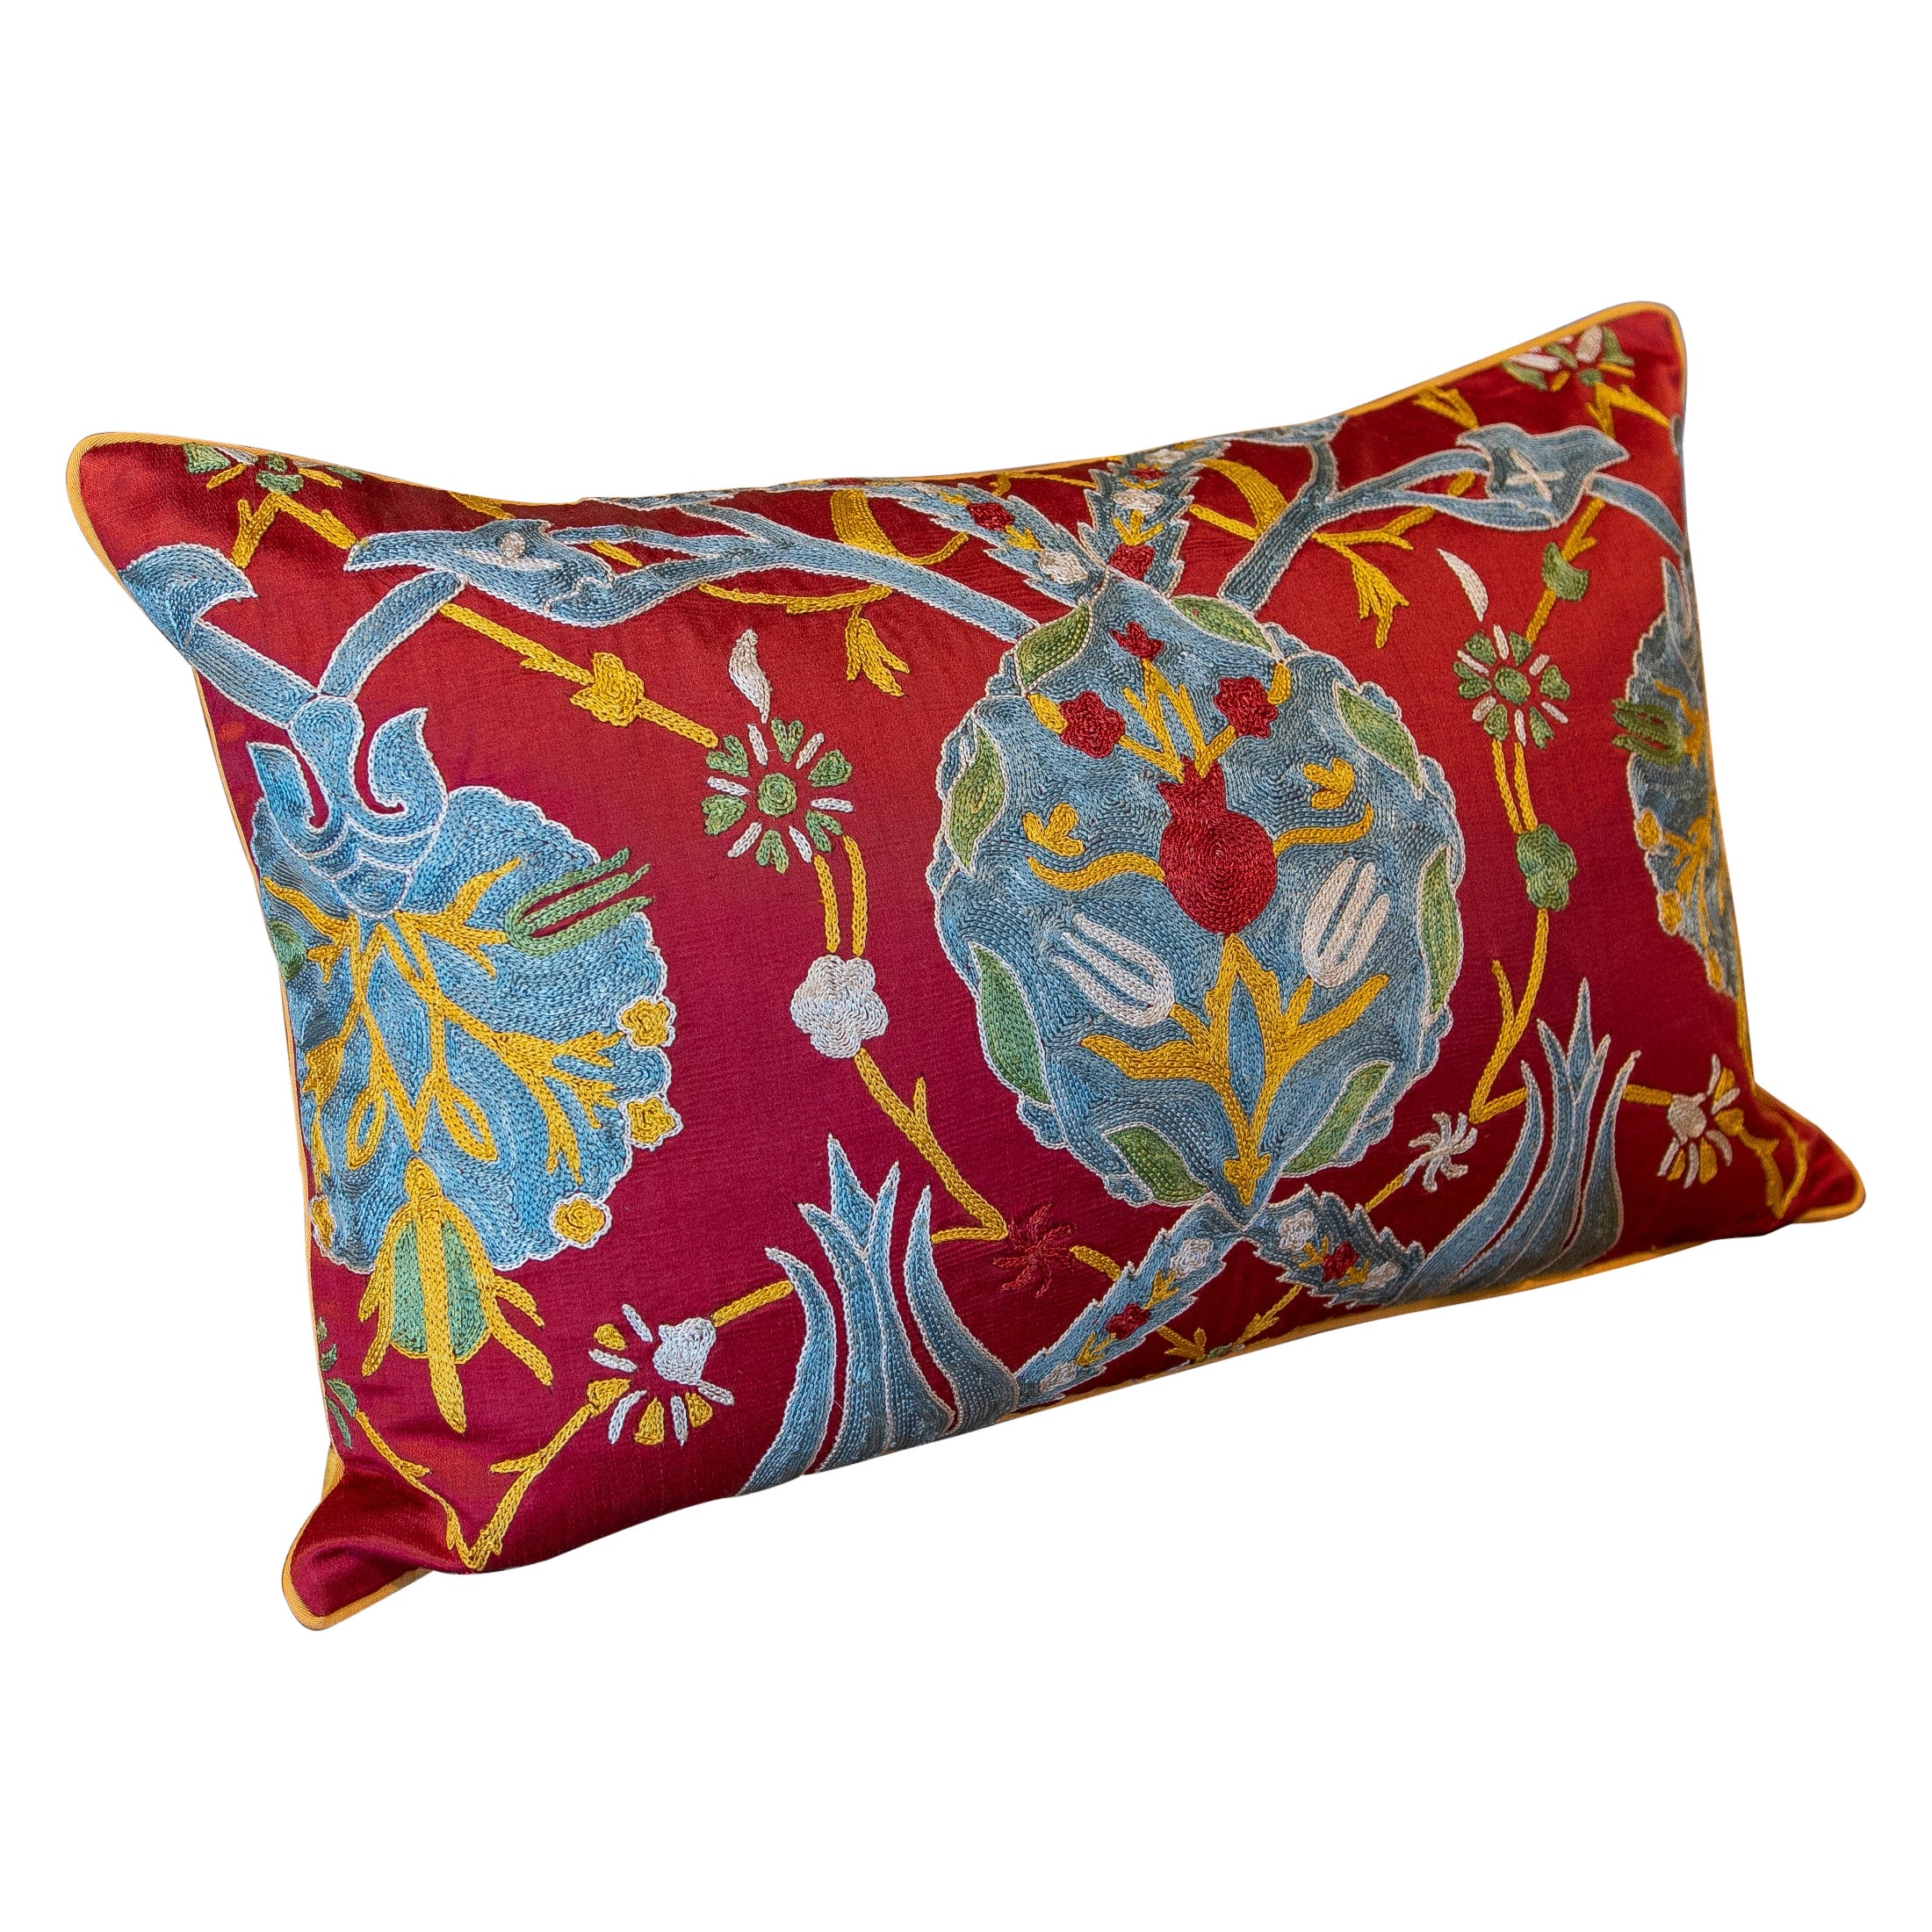 Uzbekistan Suzani Cushion Made of Silk and Cotton Fabric in Bright Colours